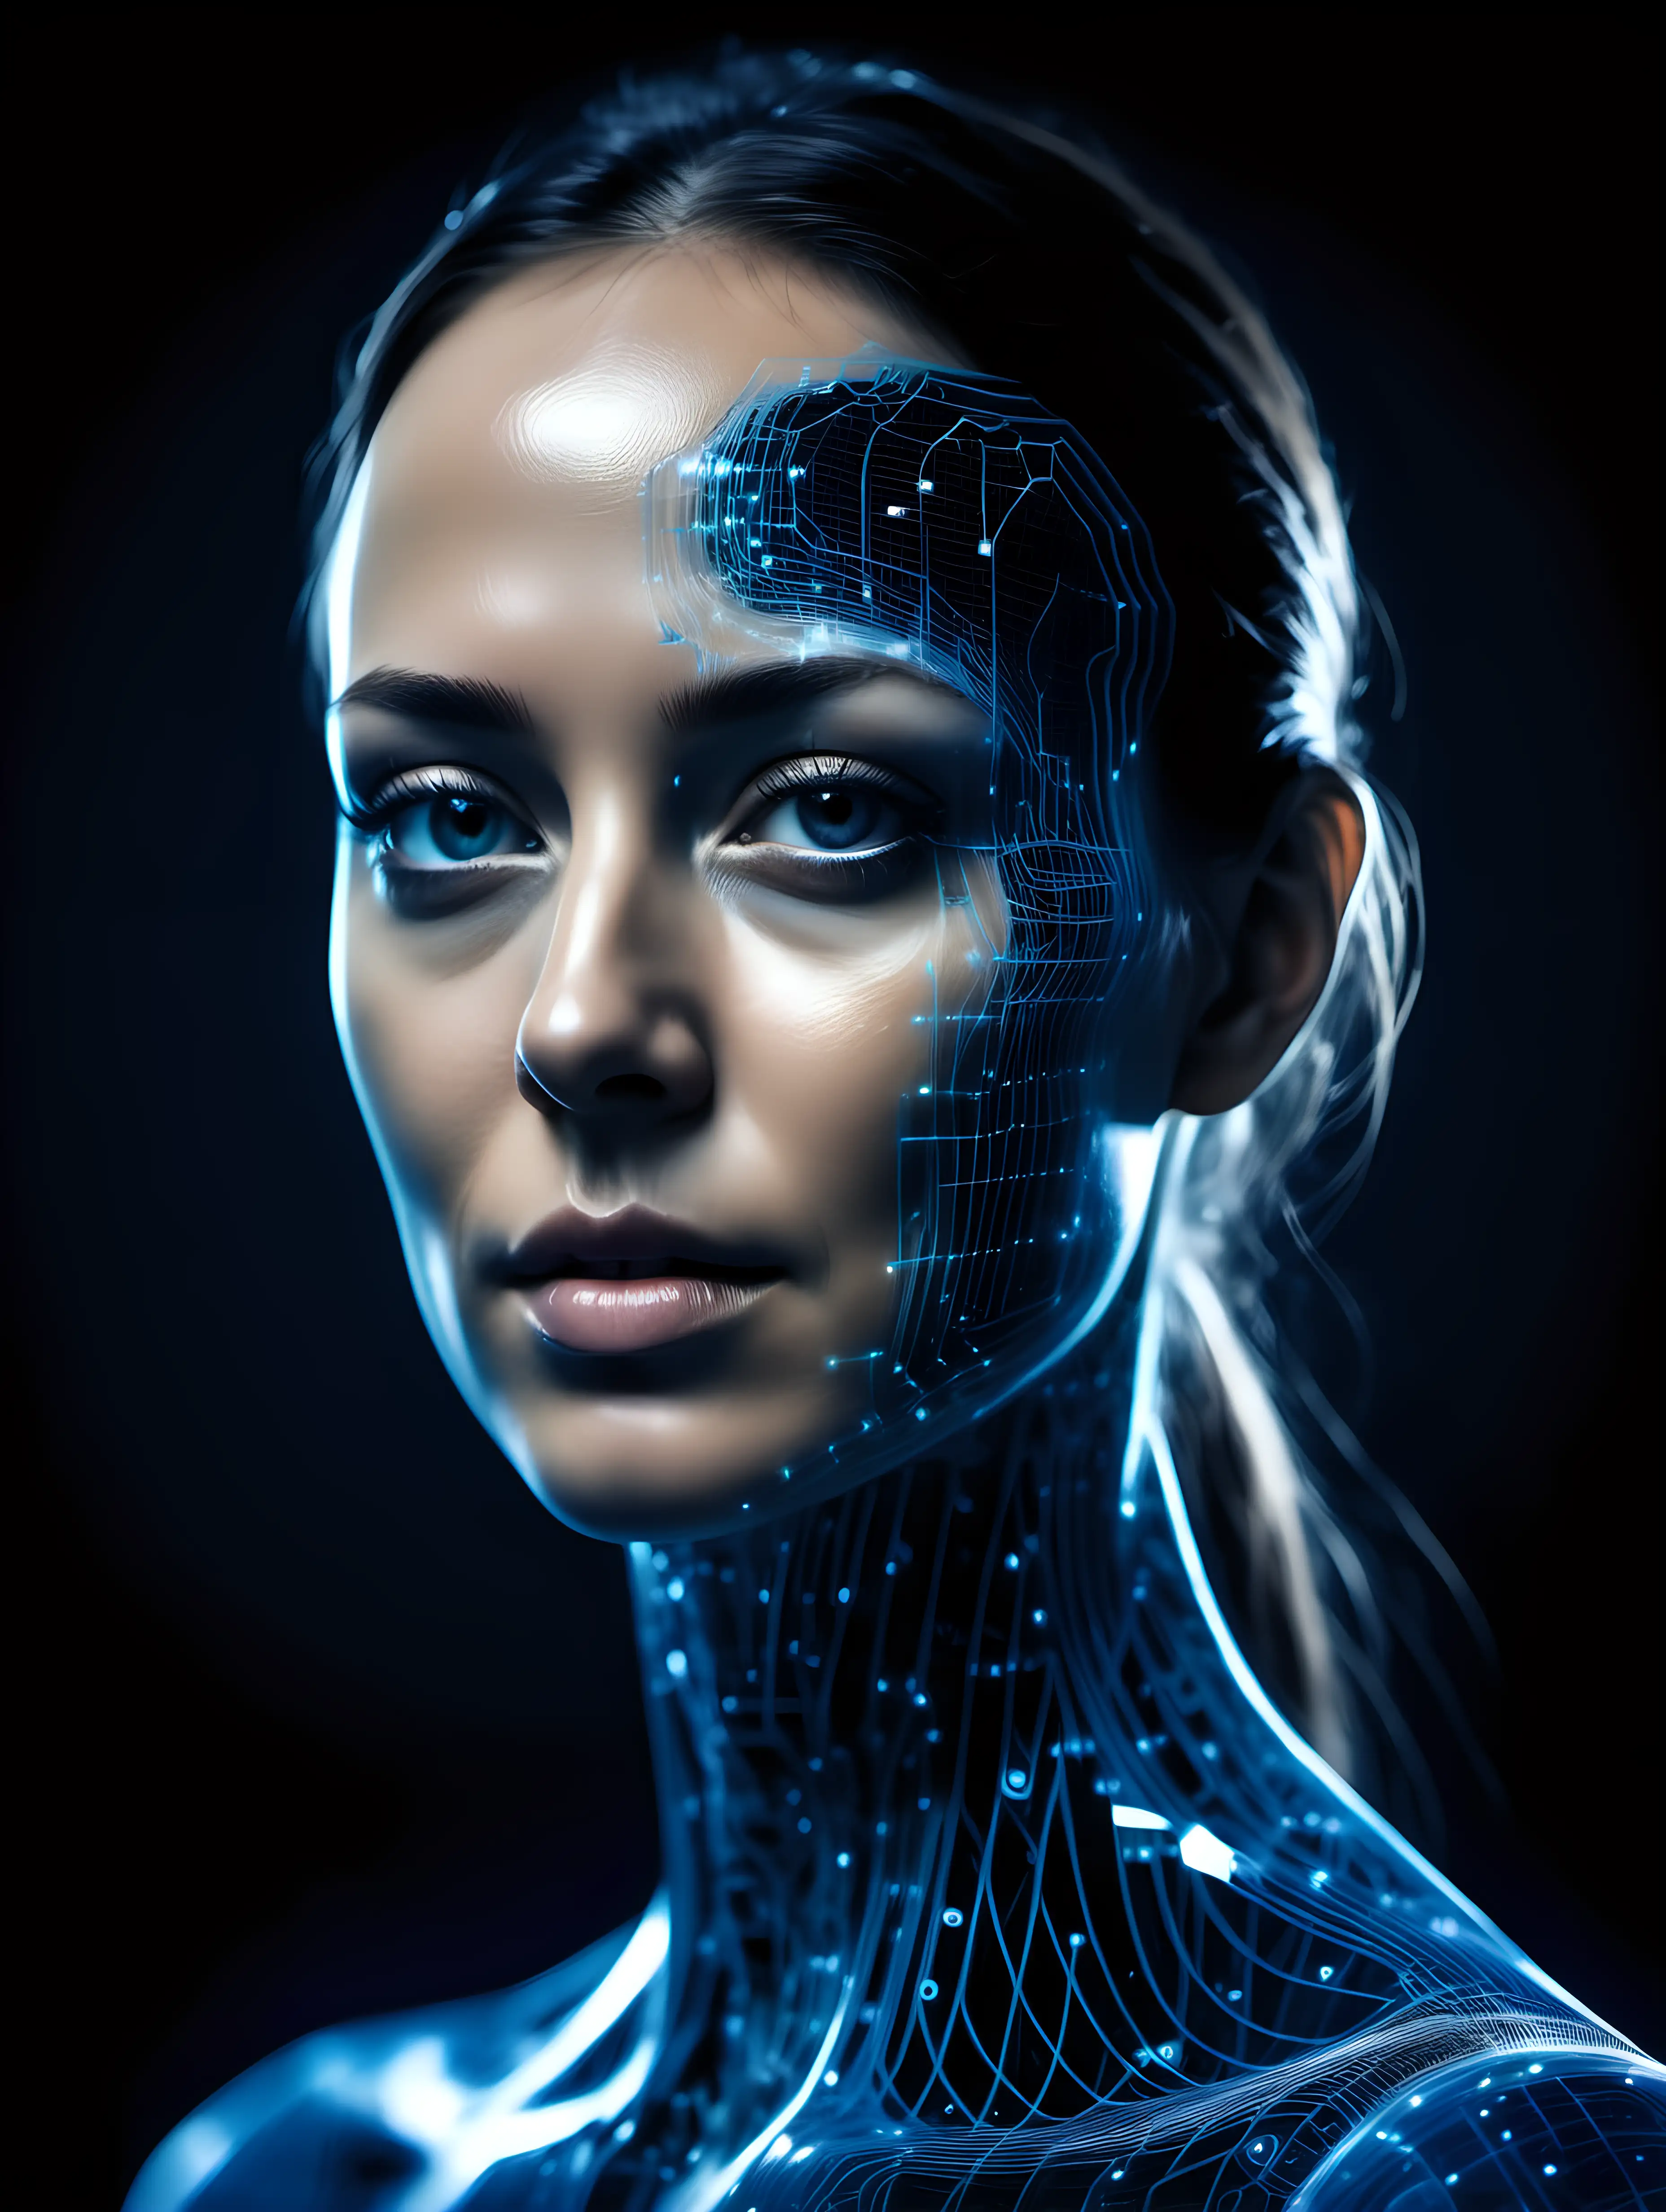 Futuristic HumanRobot Hybrid Portrait with Neural Network Waves